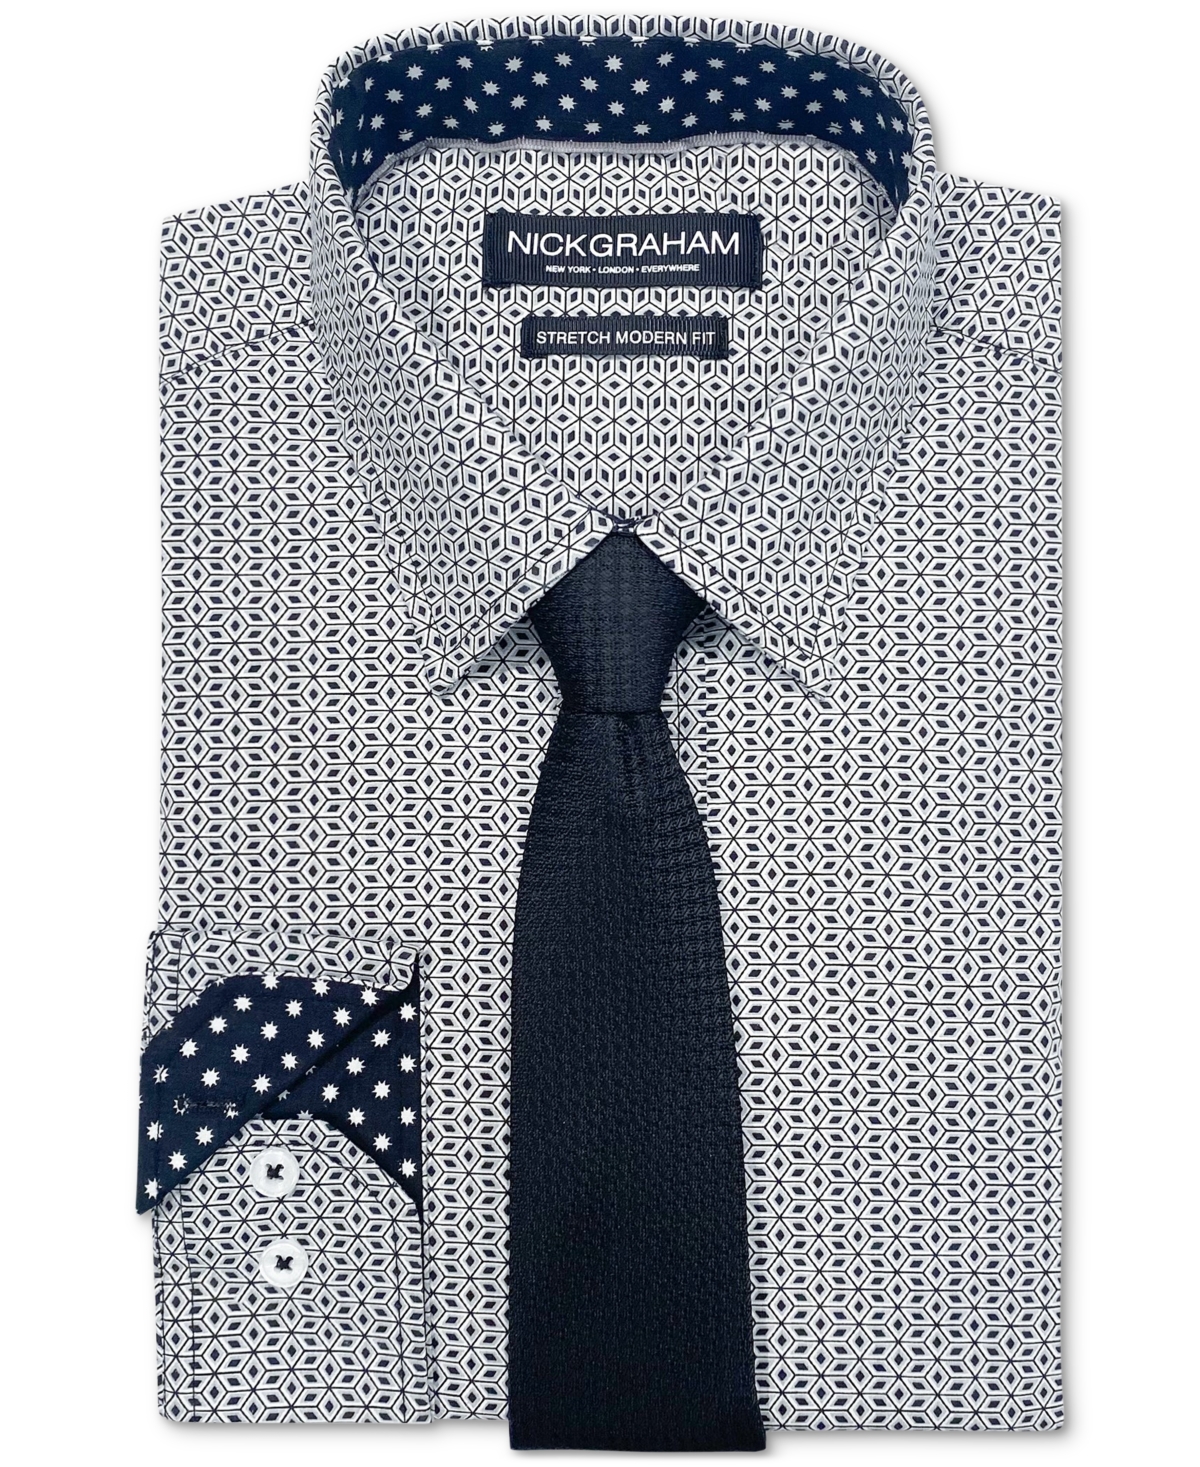 Men's Star Mosaic Dress Shirt & Tie Set - Black/grey